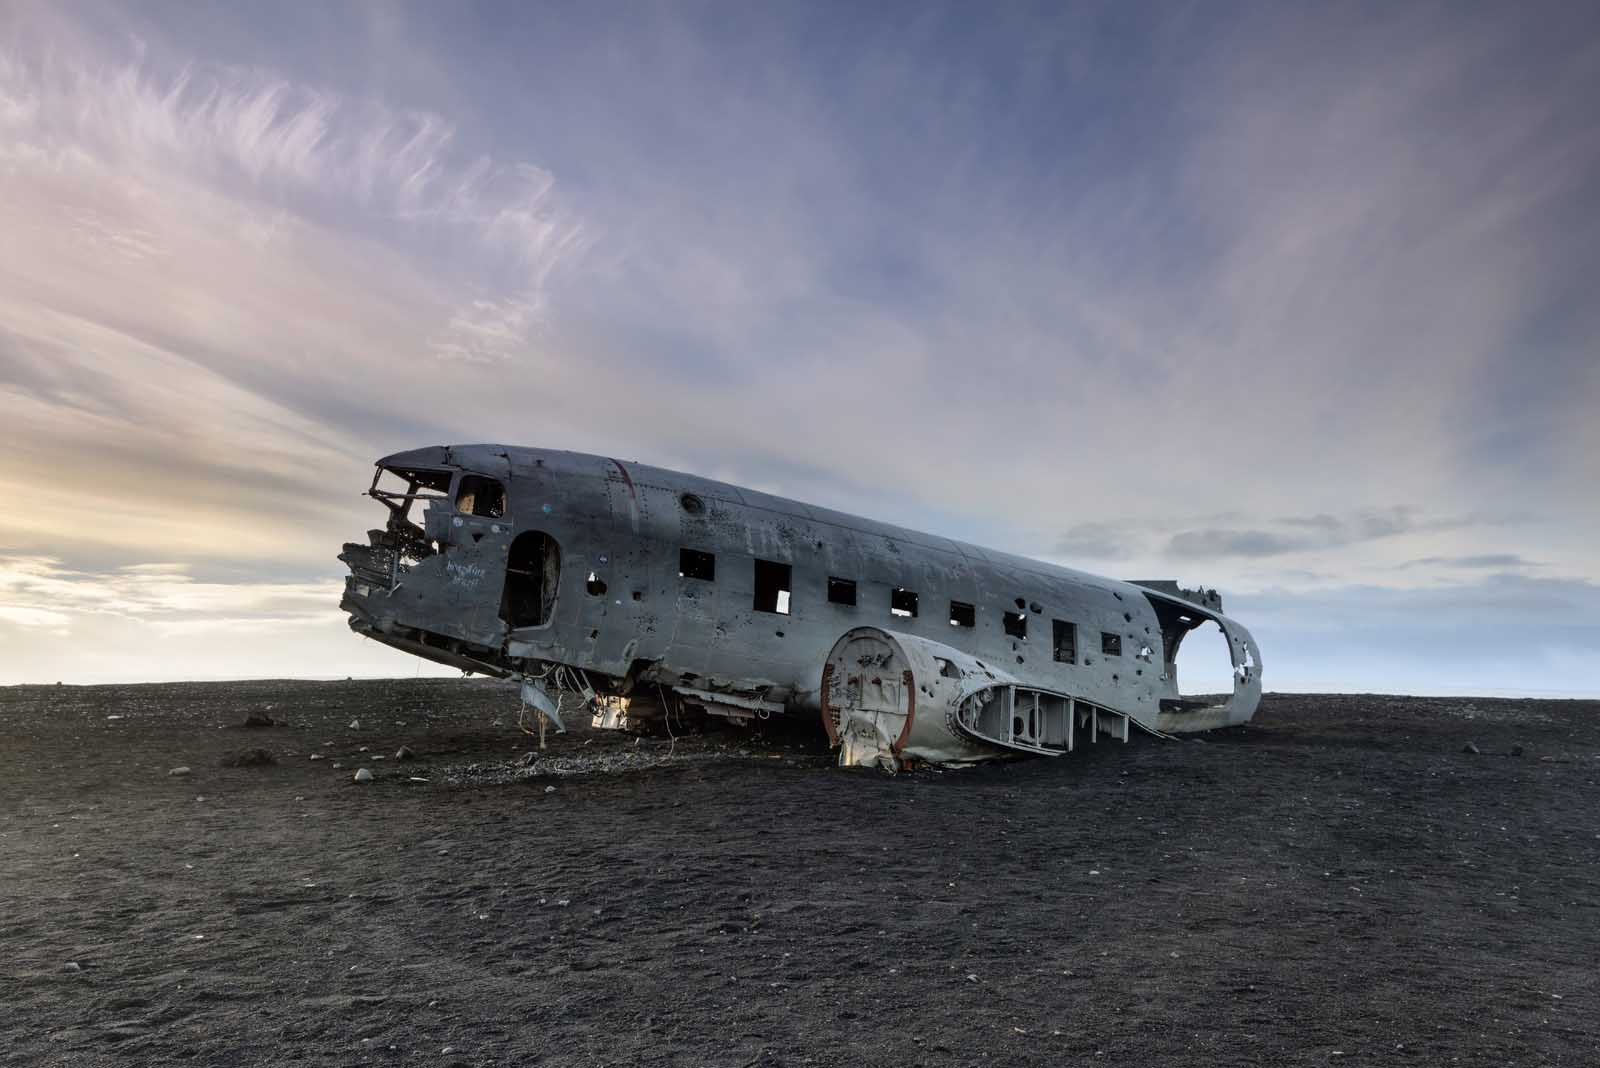 South-Coast-of-Iceland-Solheimasandur-Plane-Wreck